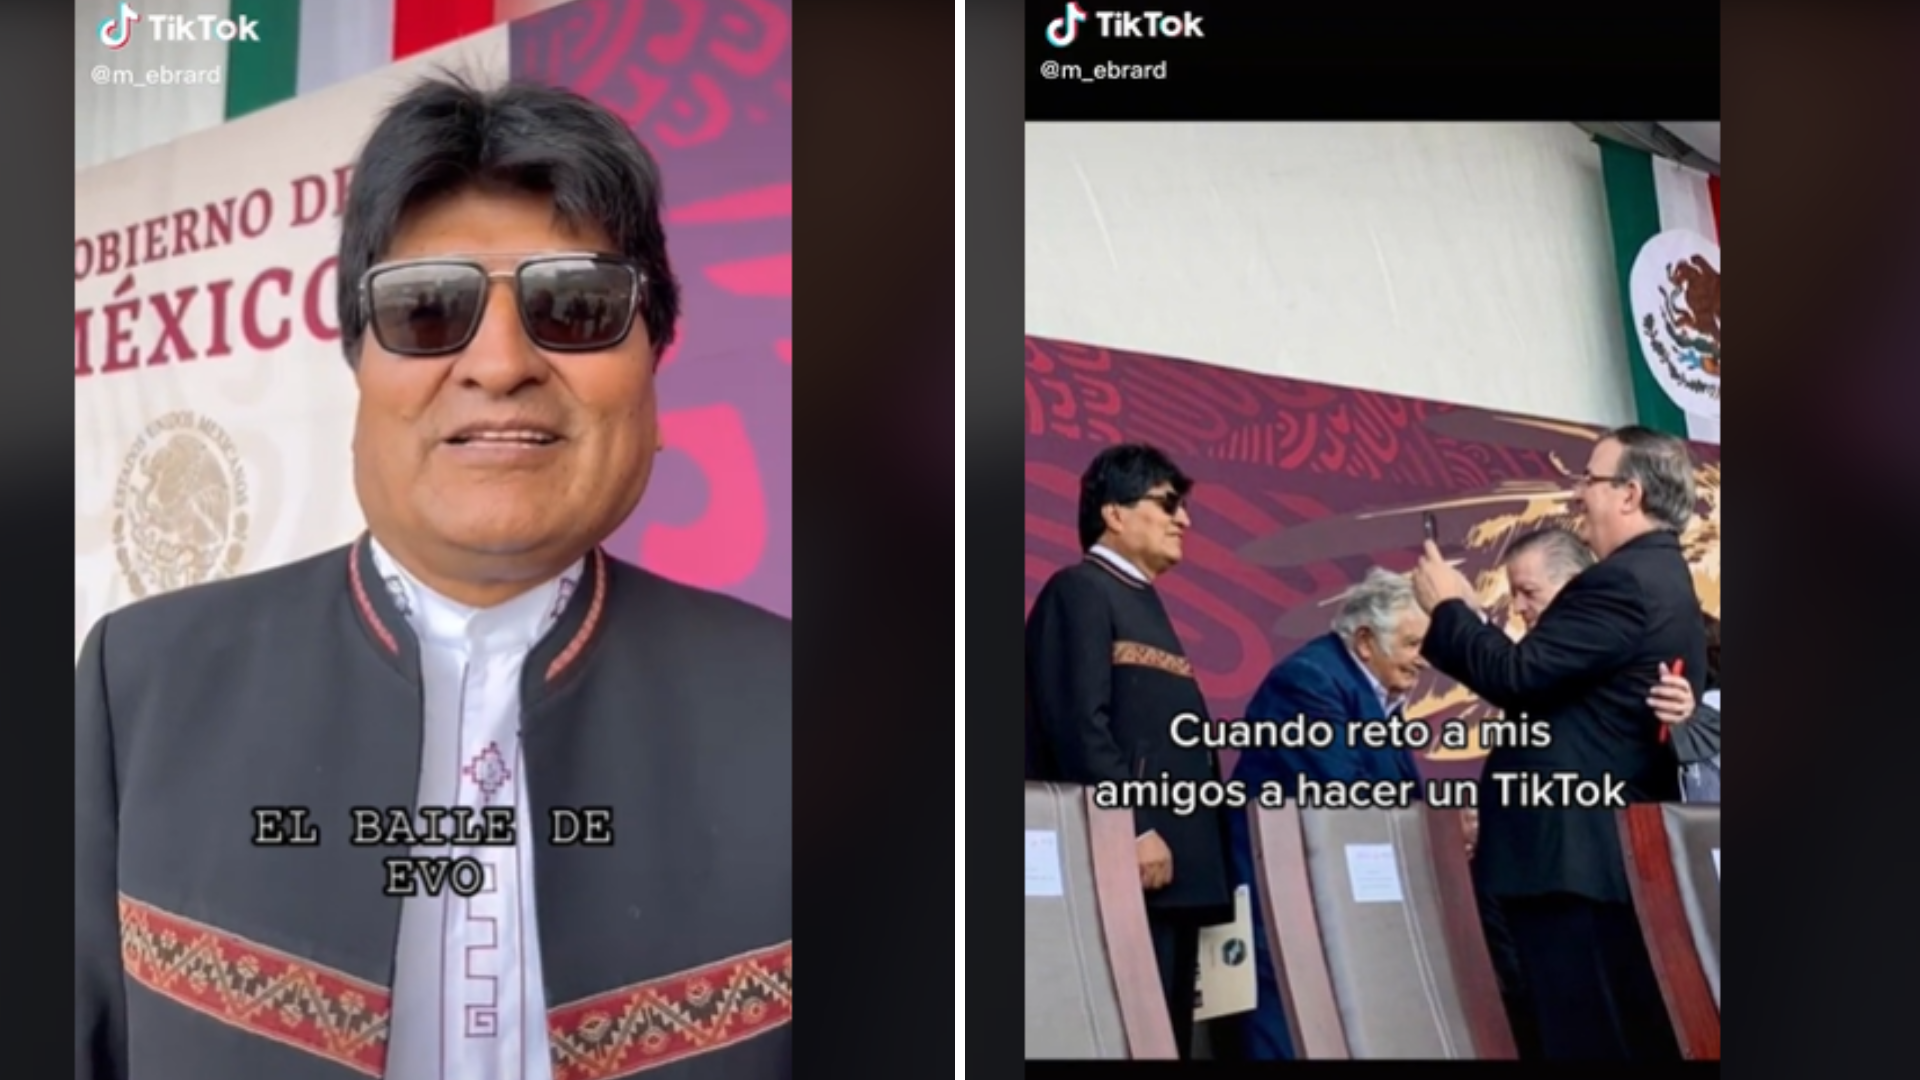 Evo Morales, former president of Bolivia (Photos: Tiktok/m_ebrard/Marcelo Ebrard)